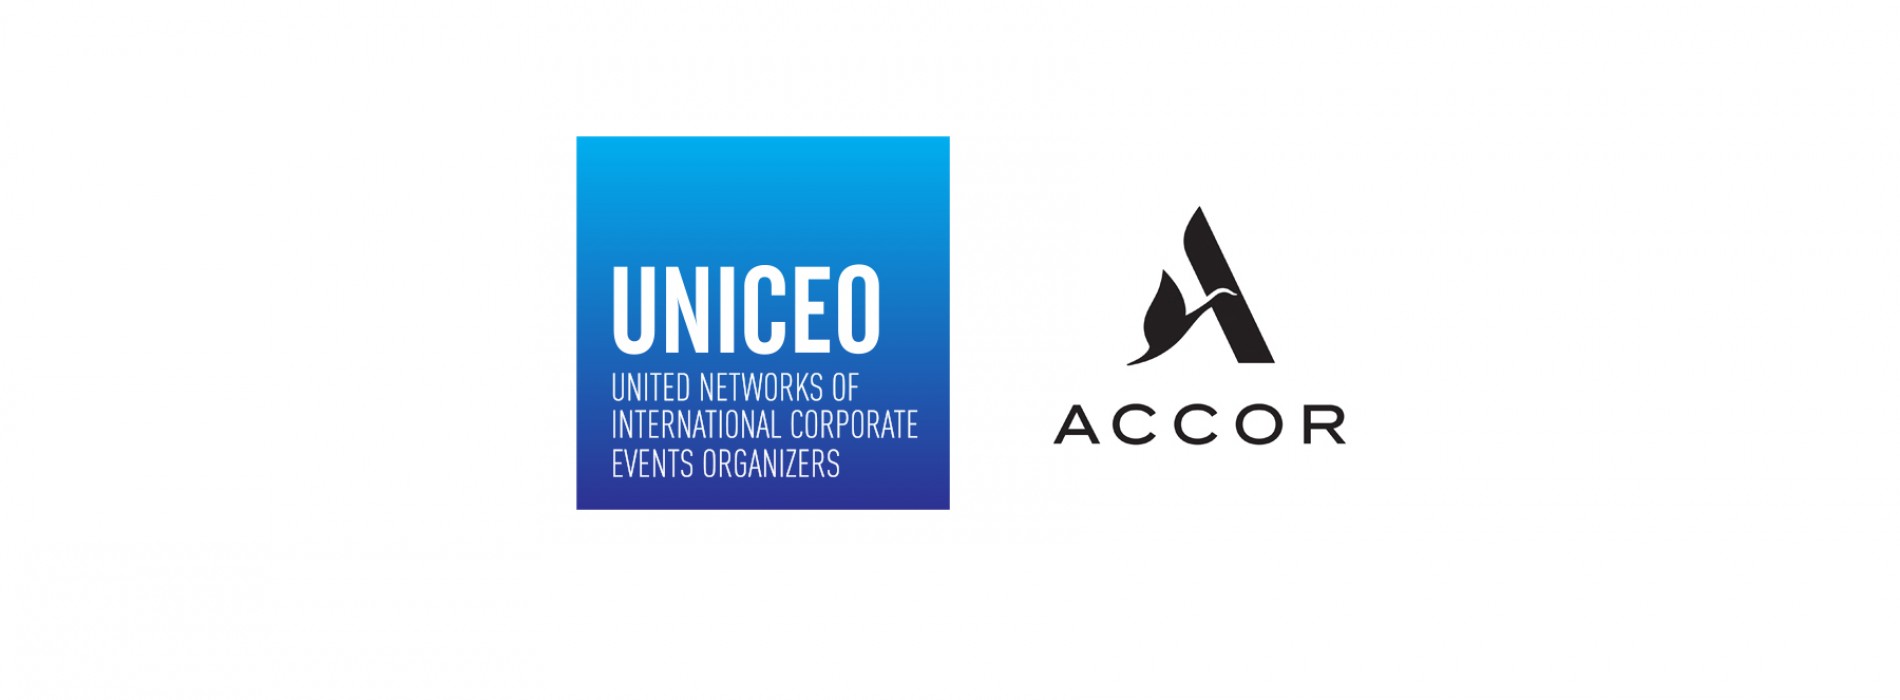 UNICEO® announces a major partnership with Accor